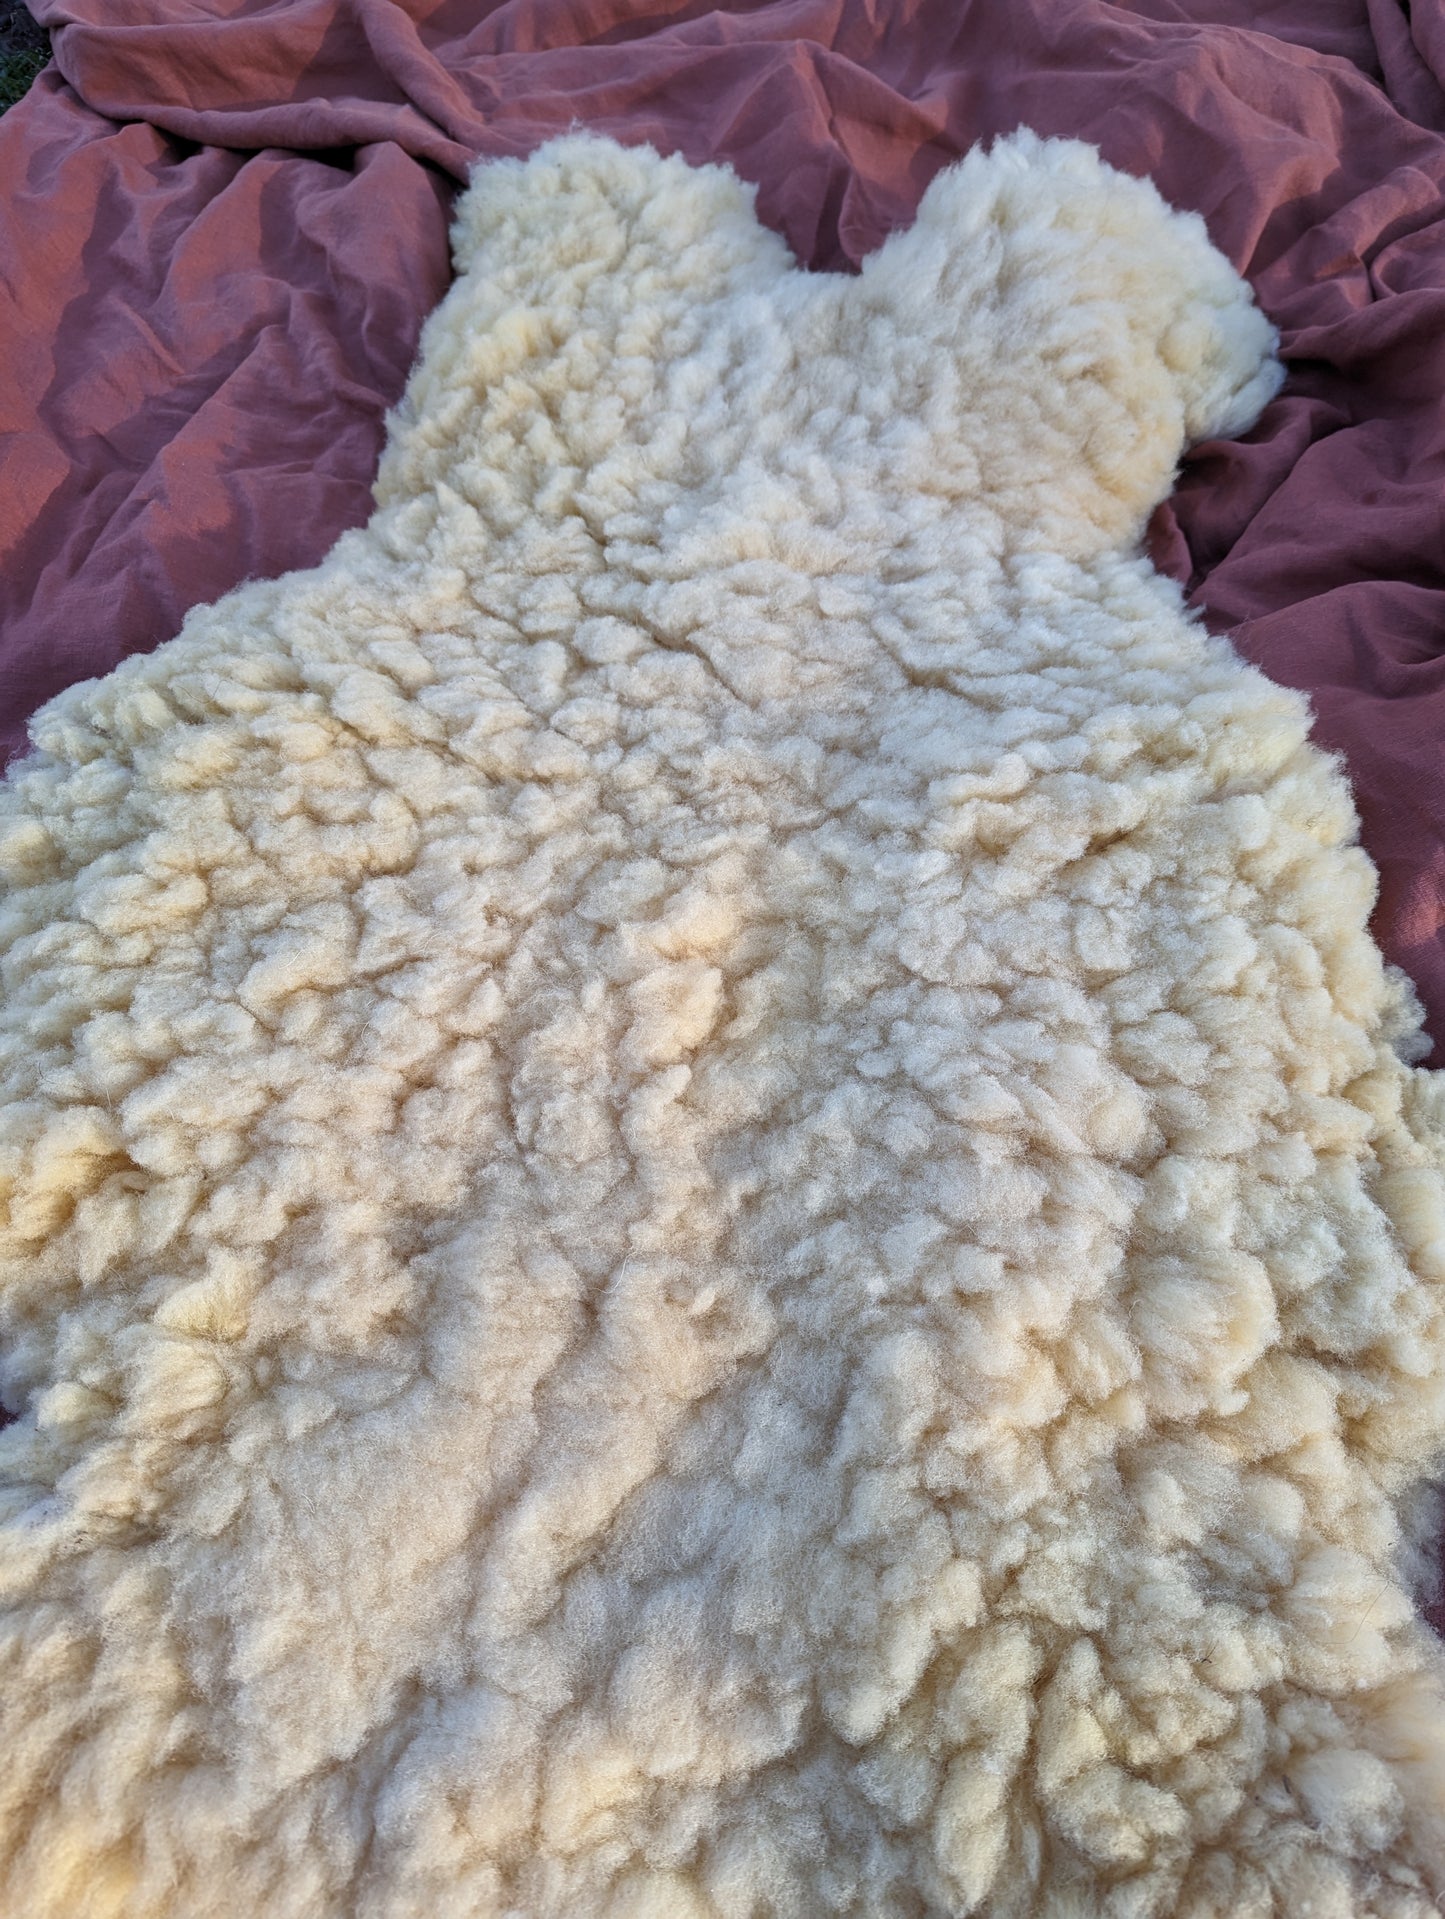 Sheepskin - dense teddy